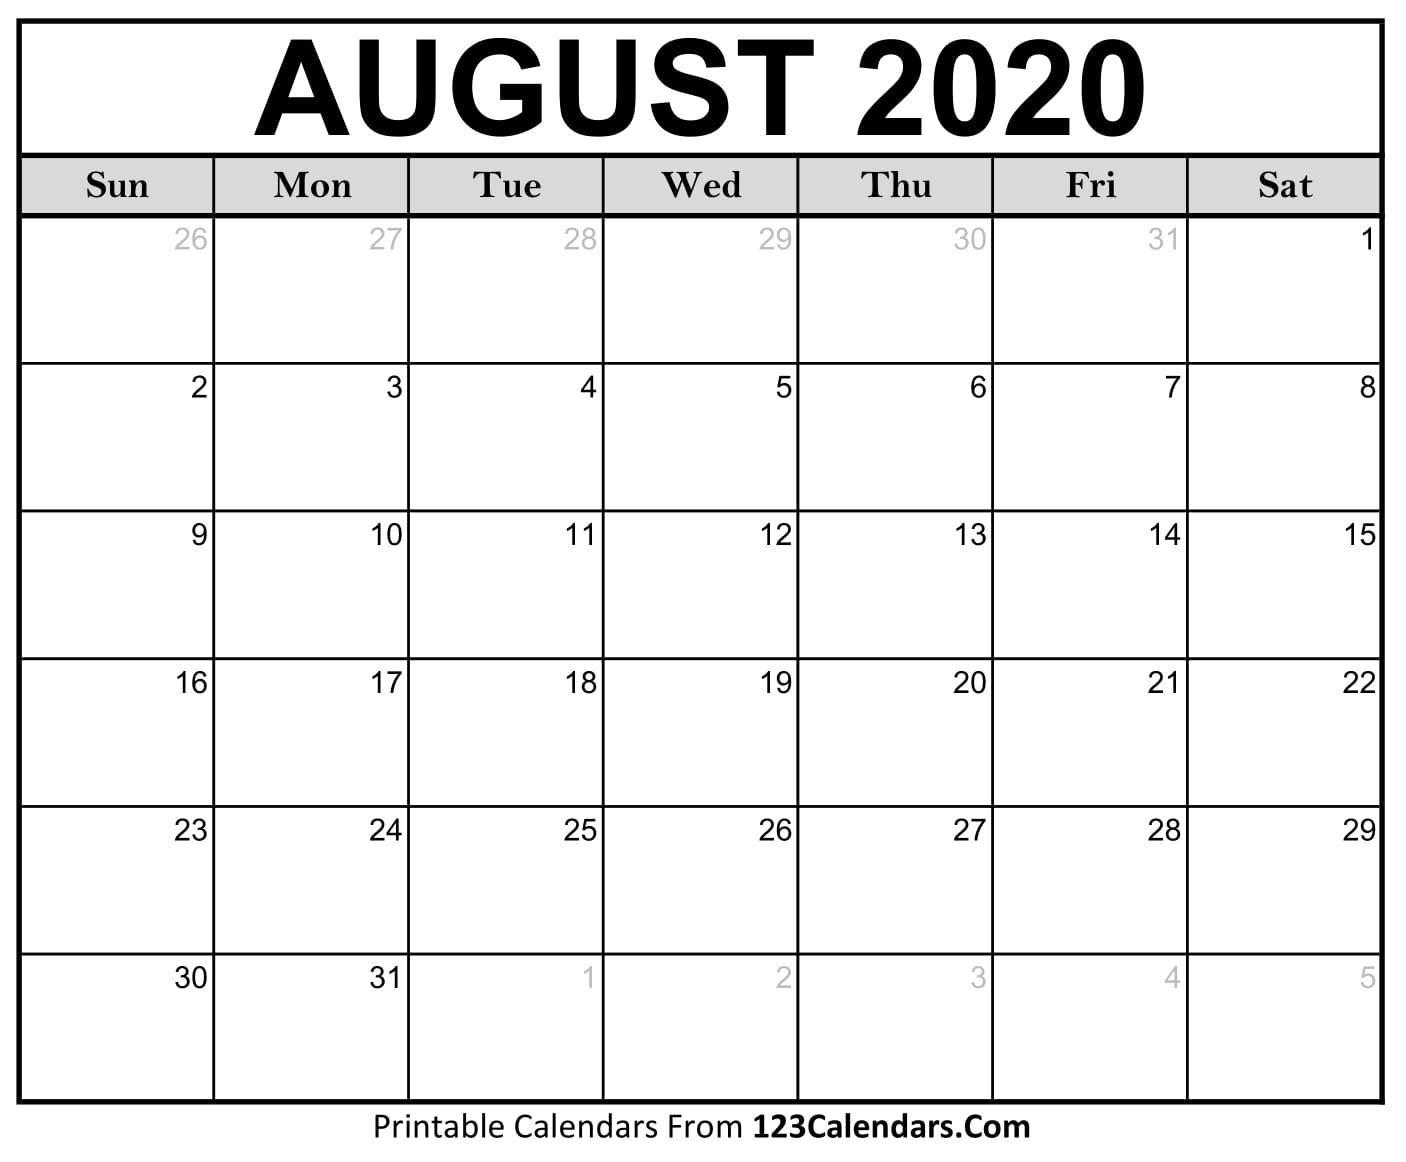 August 2020 Printable Calendar | 123Calendars